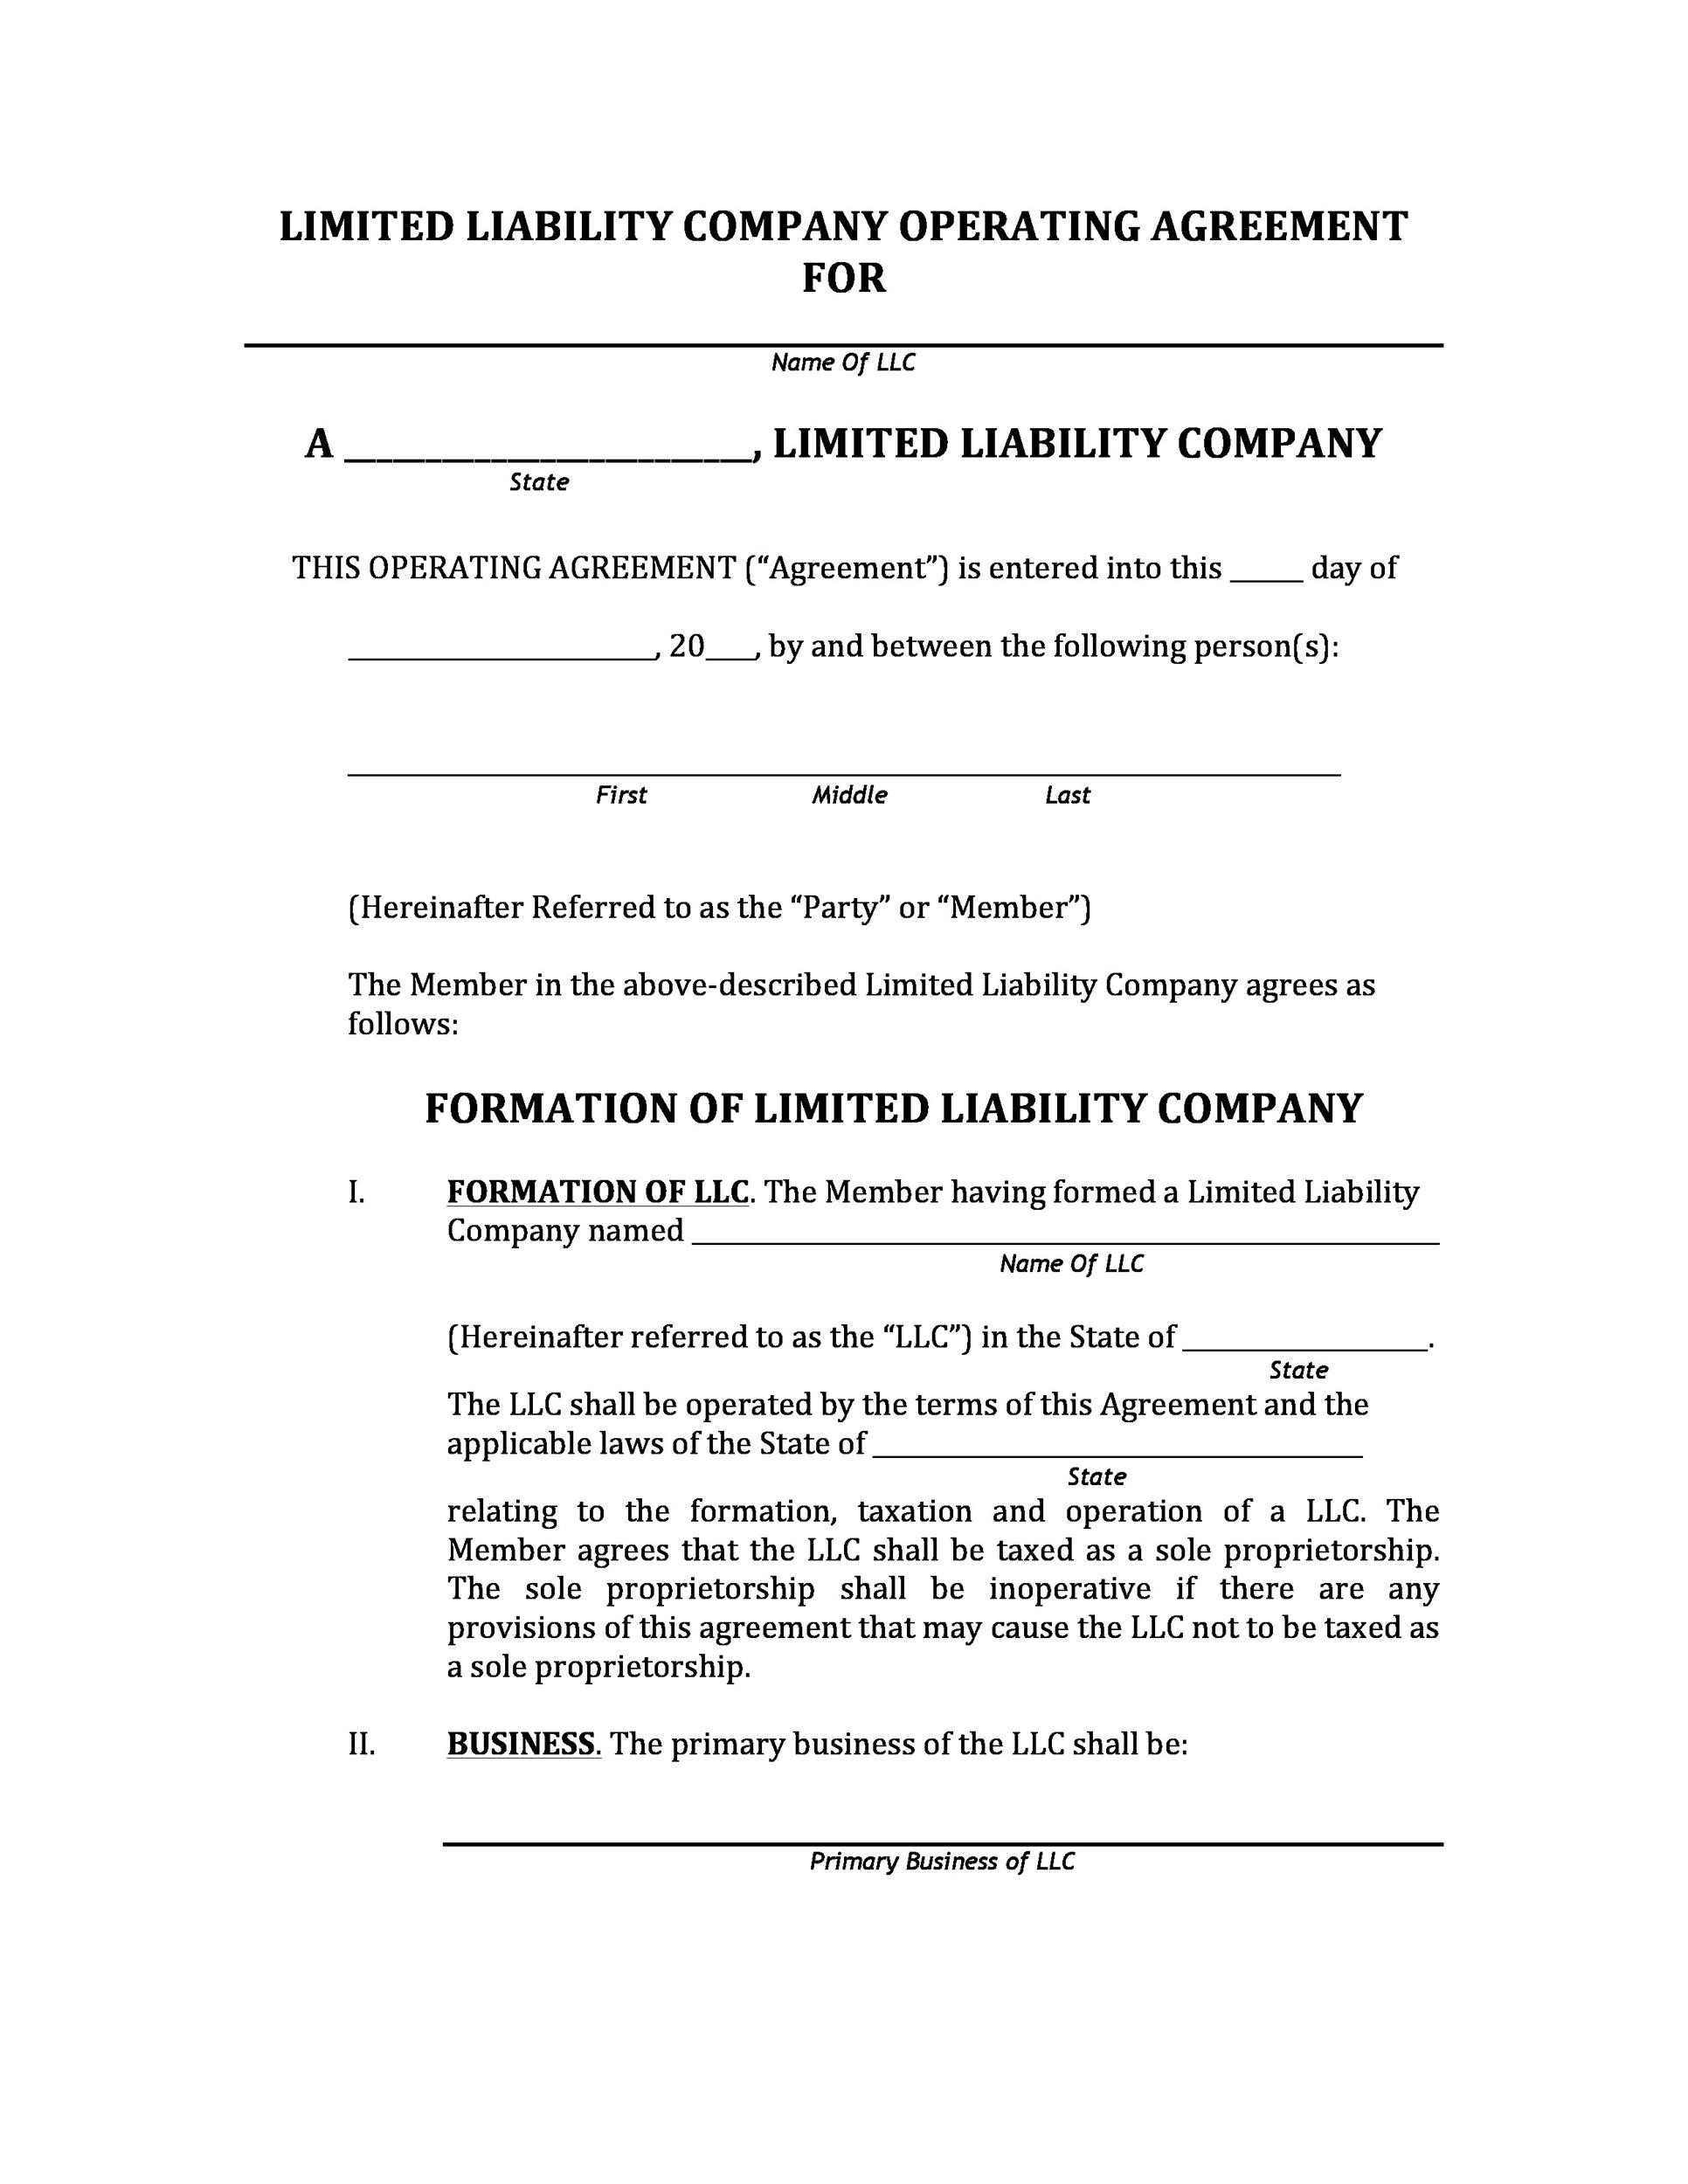 30 Professional LLC Operating Agreement Templates ᐅ TemplateLab